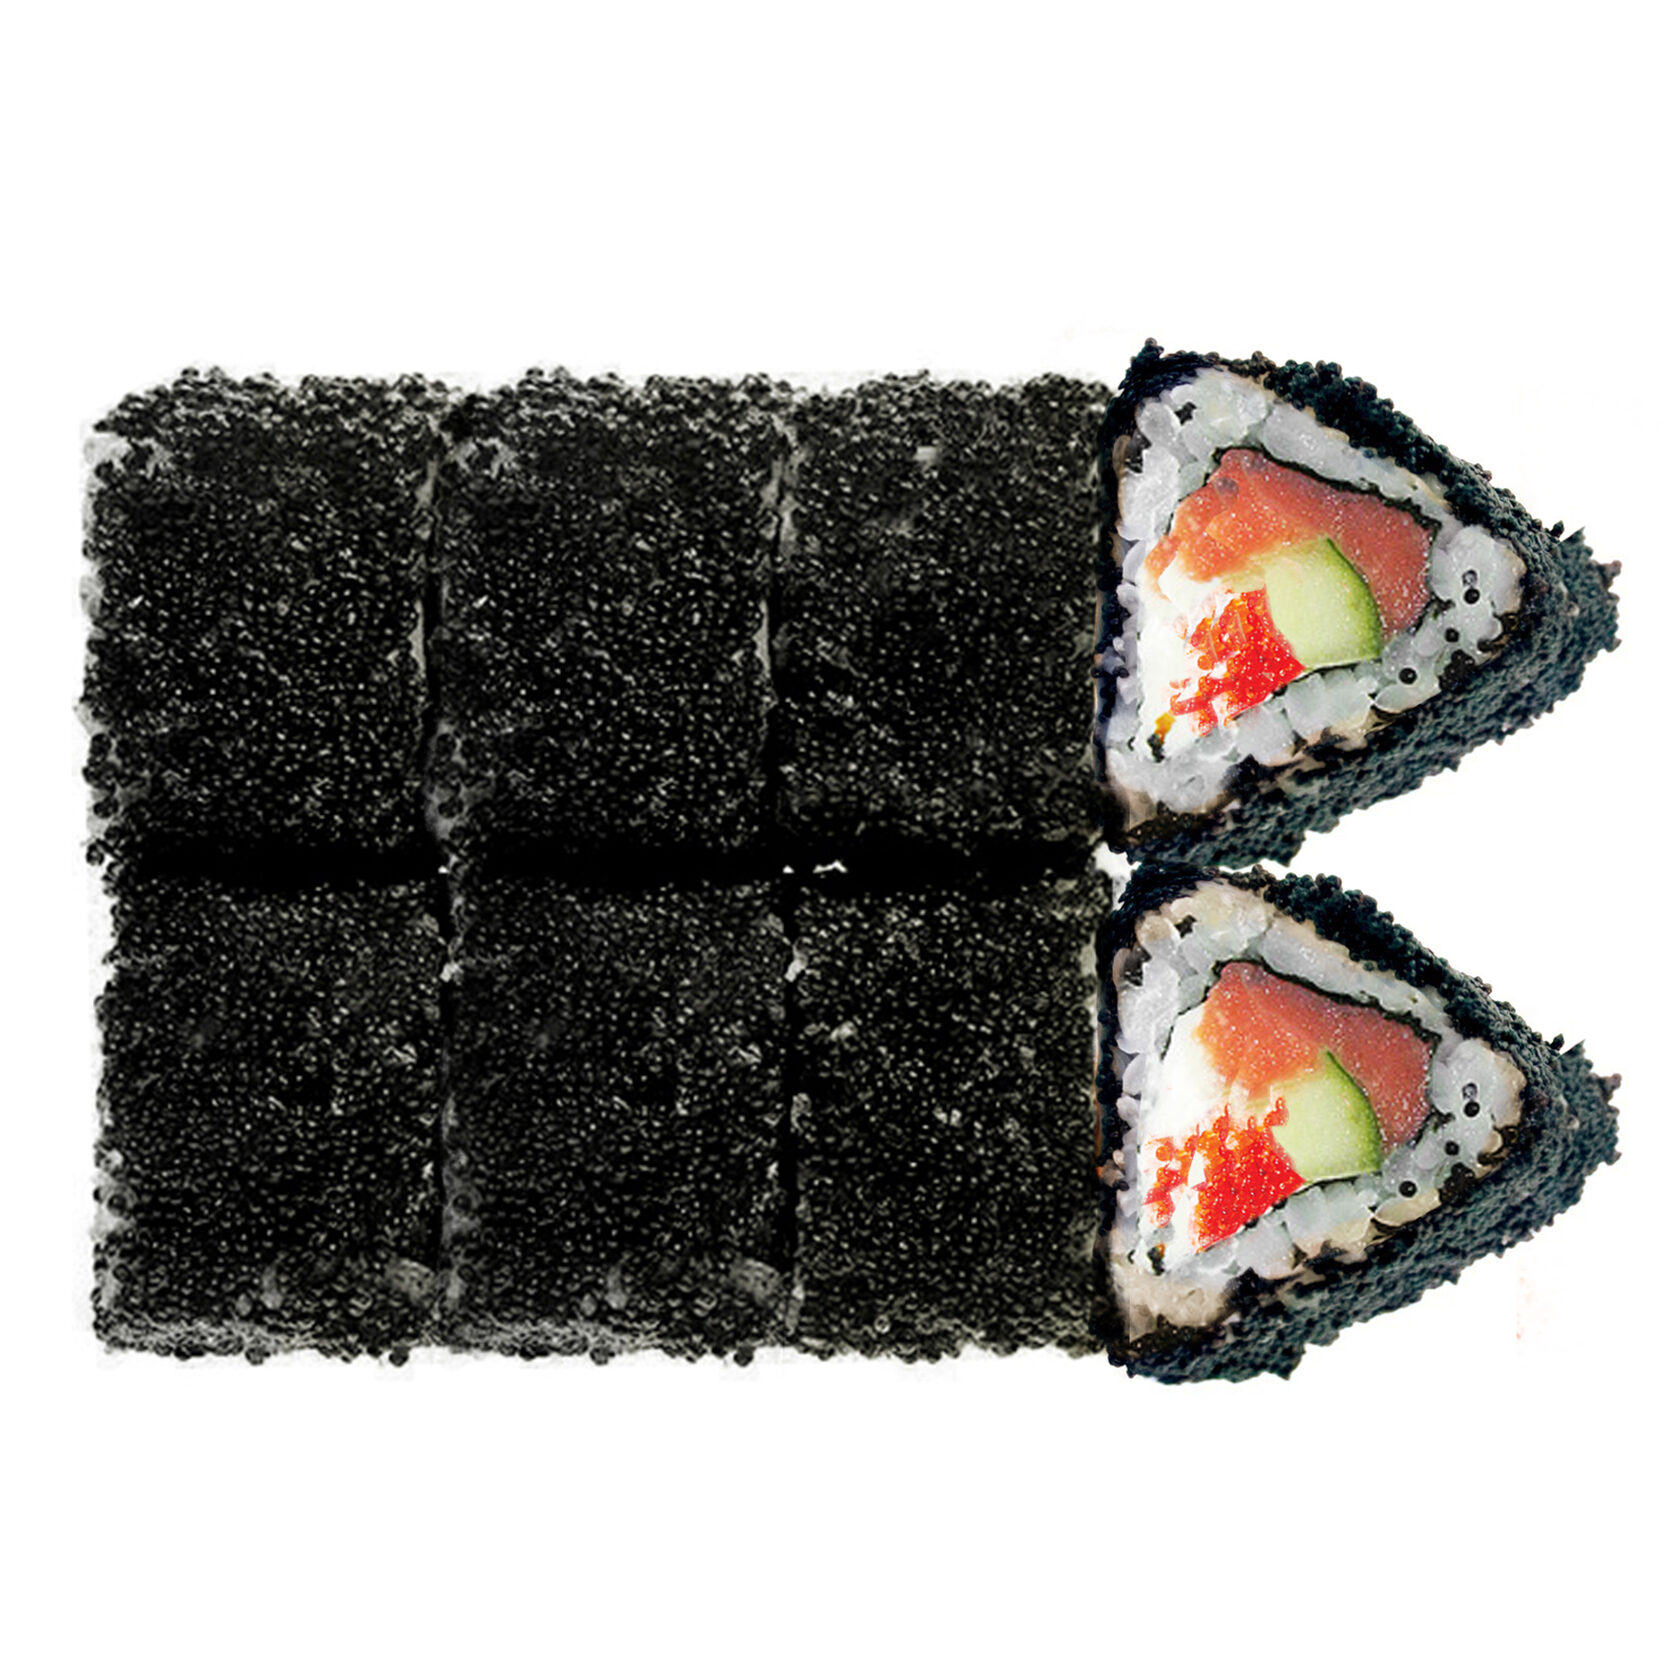 Суши анапа вкусные фото 108